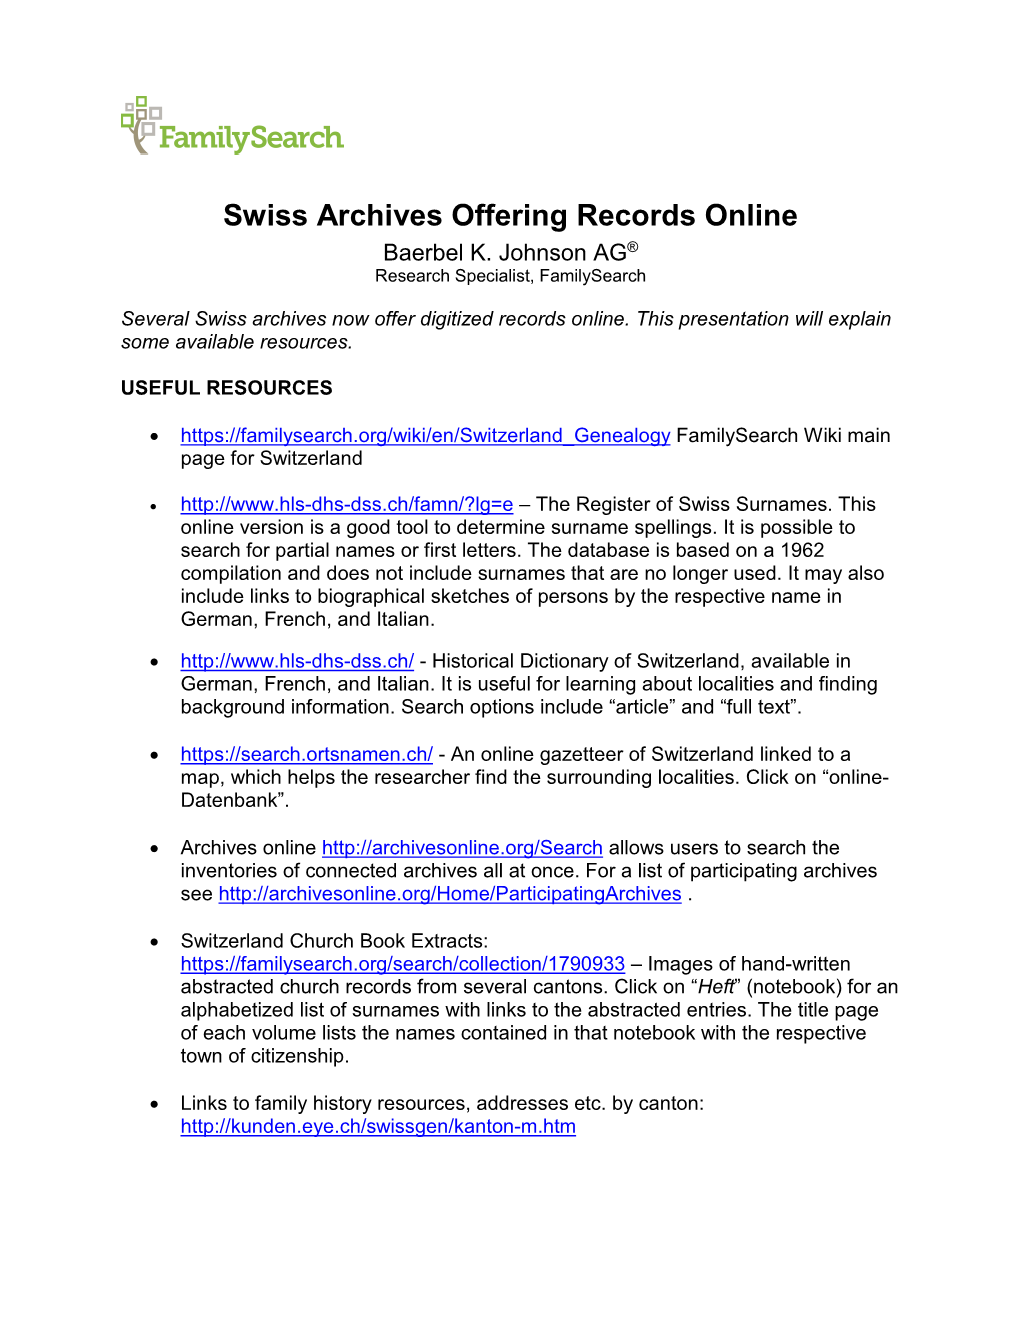 Swiss Archives Offering Records Online Baerbel K